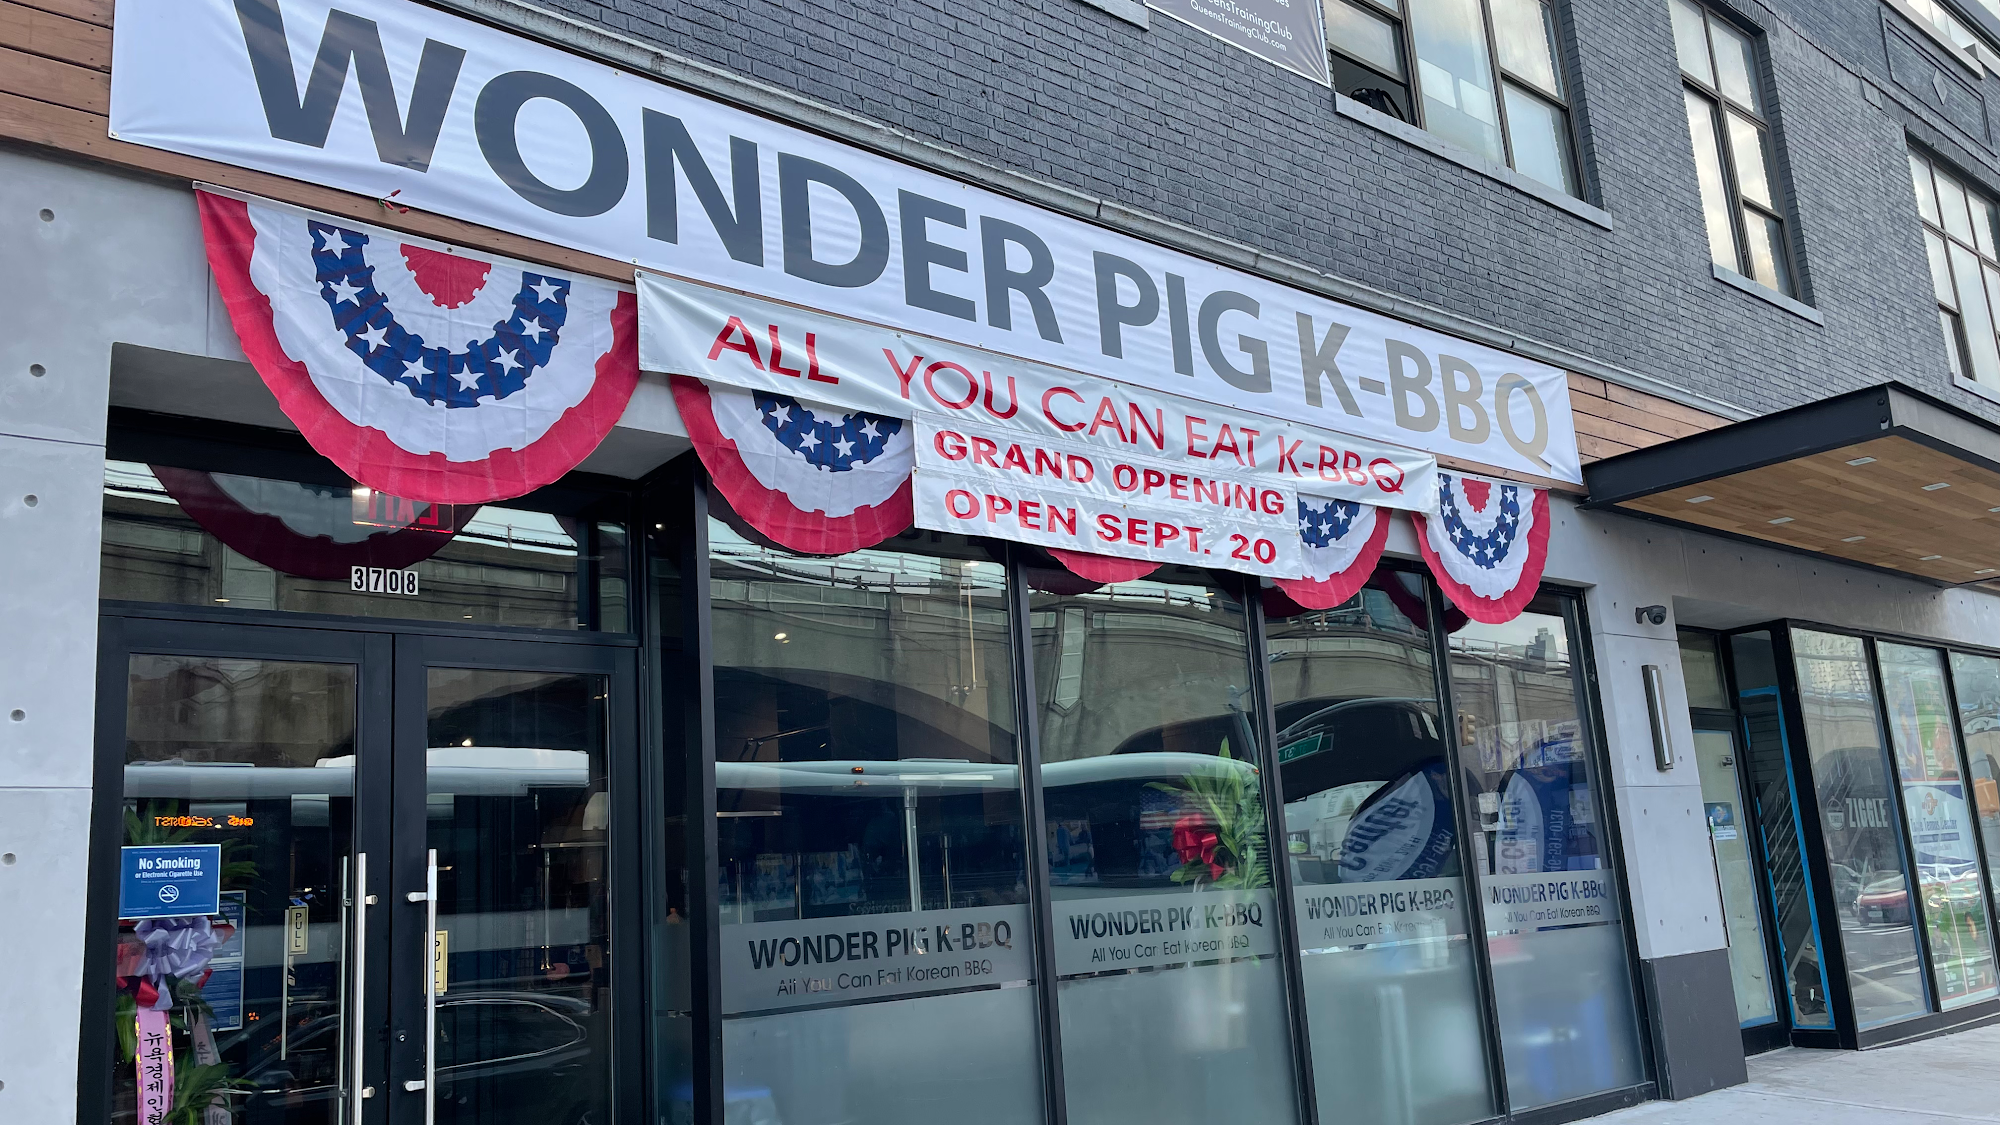 Wonder Pig K-BBQ